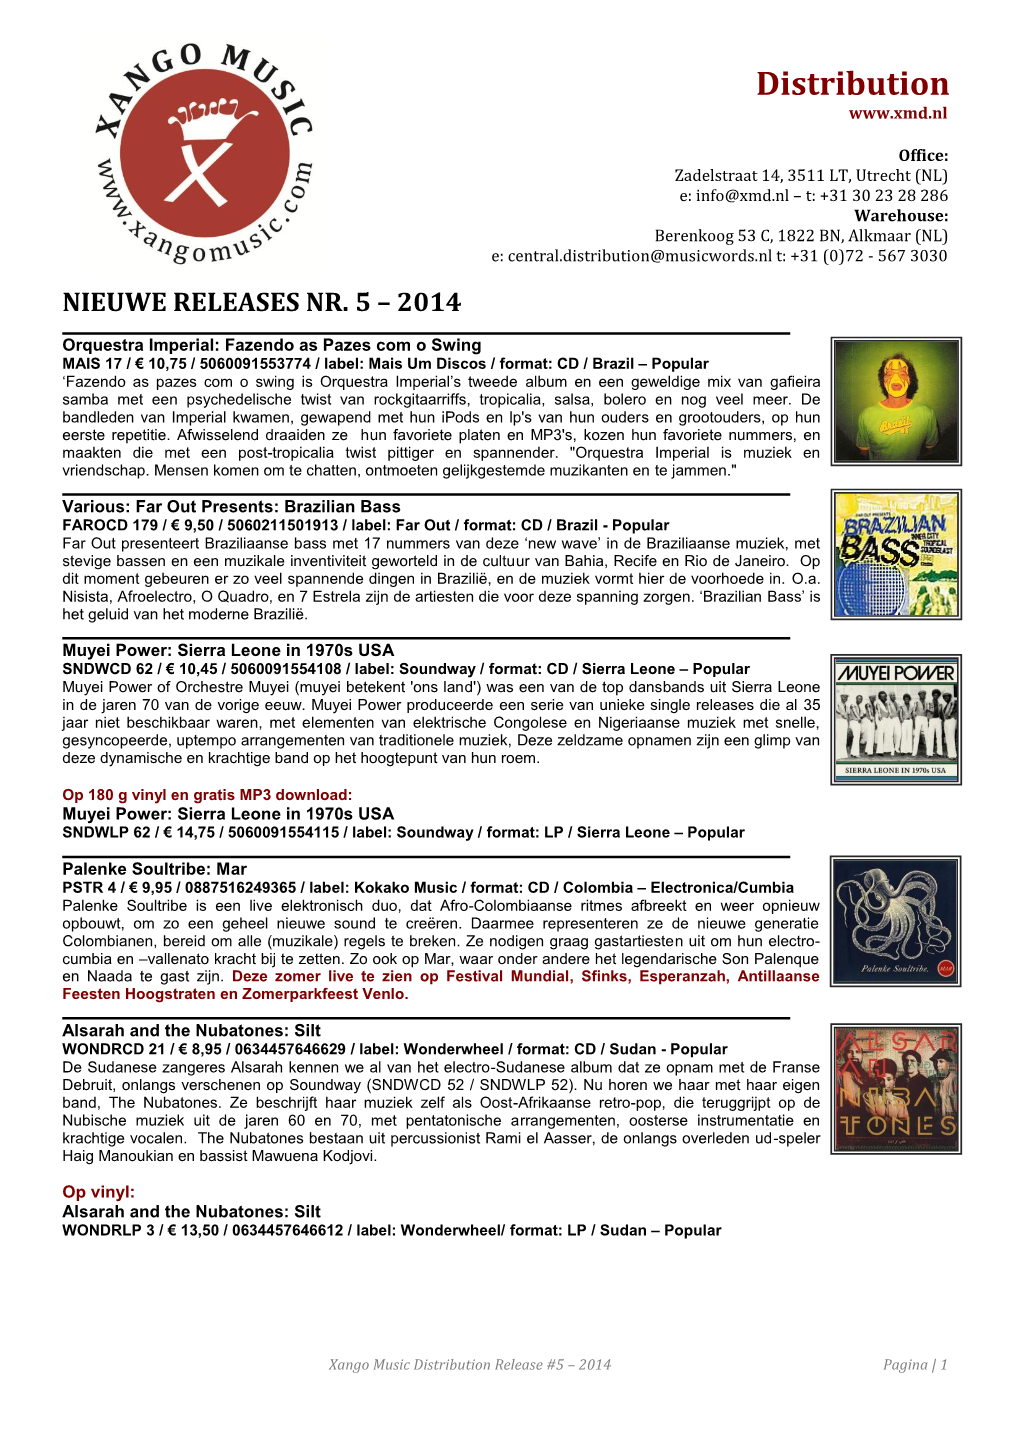 Xango Music Distribution Release #5 – 2014 Pagina | 1